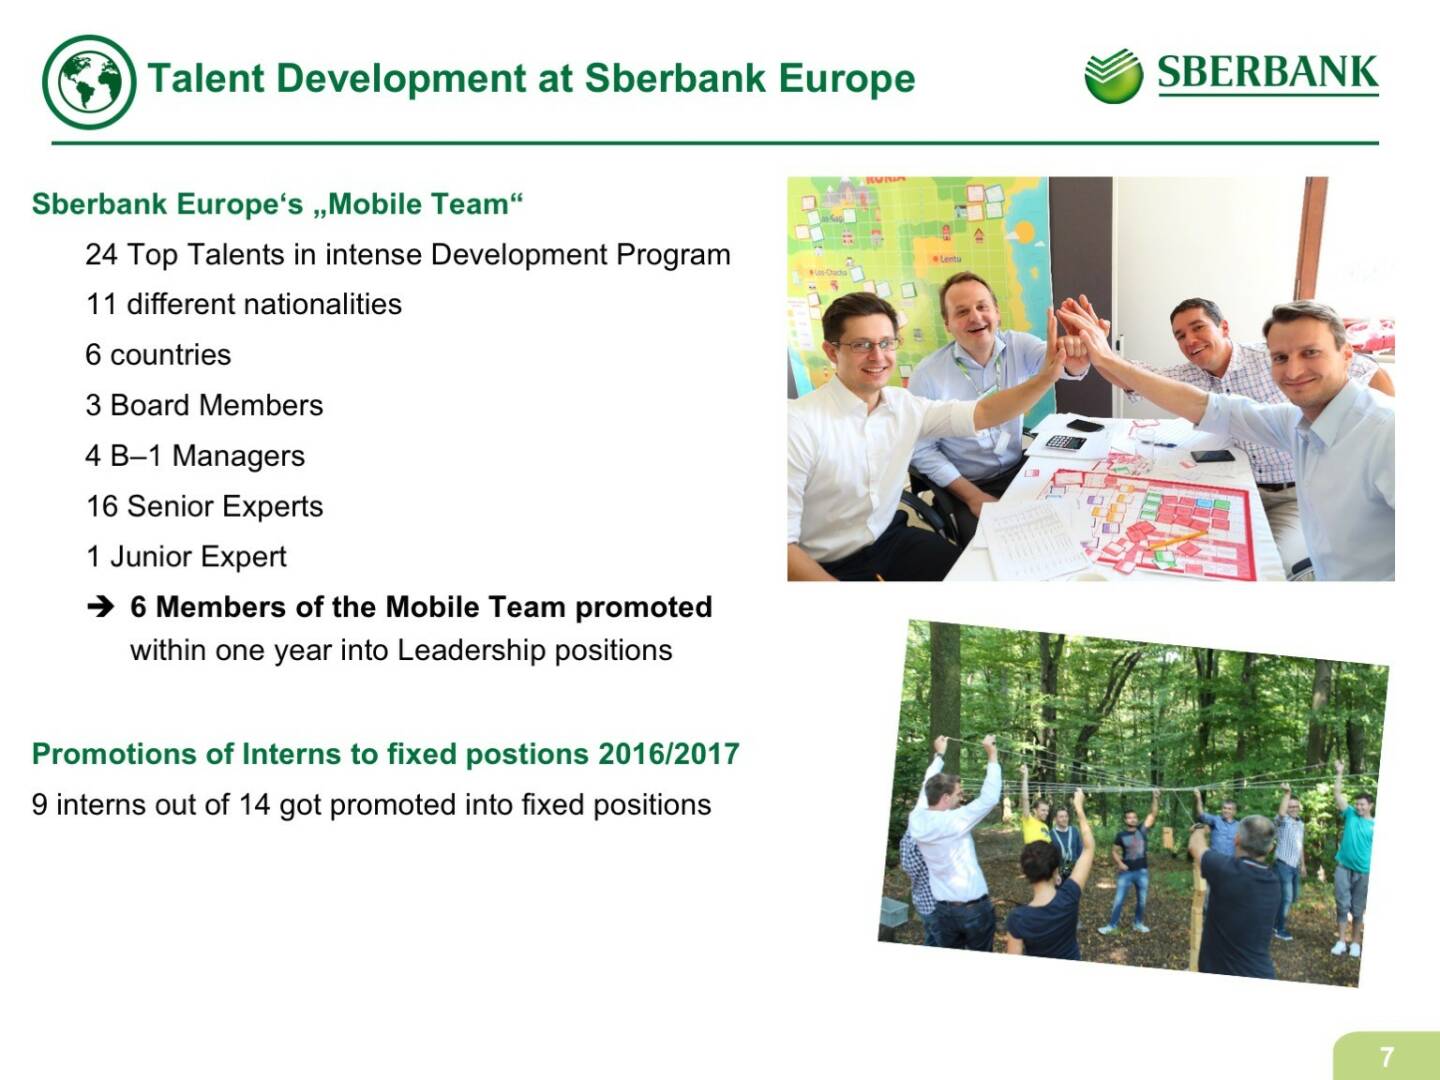 Sberbank Europe - Talent Development